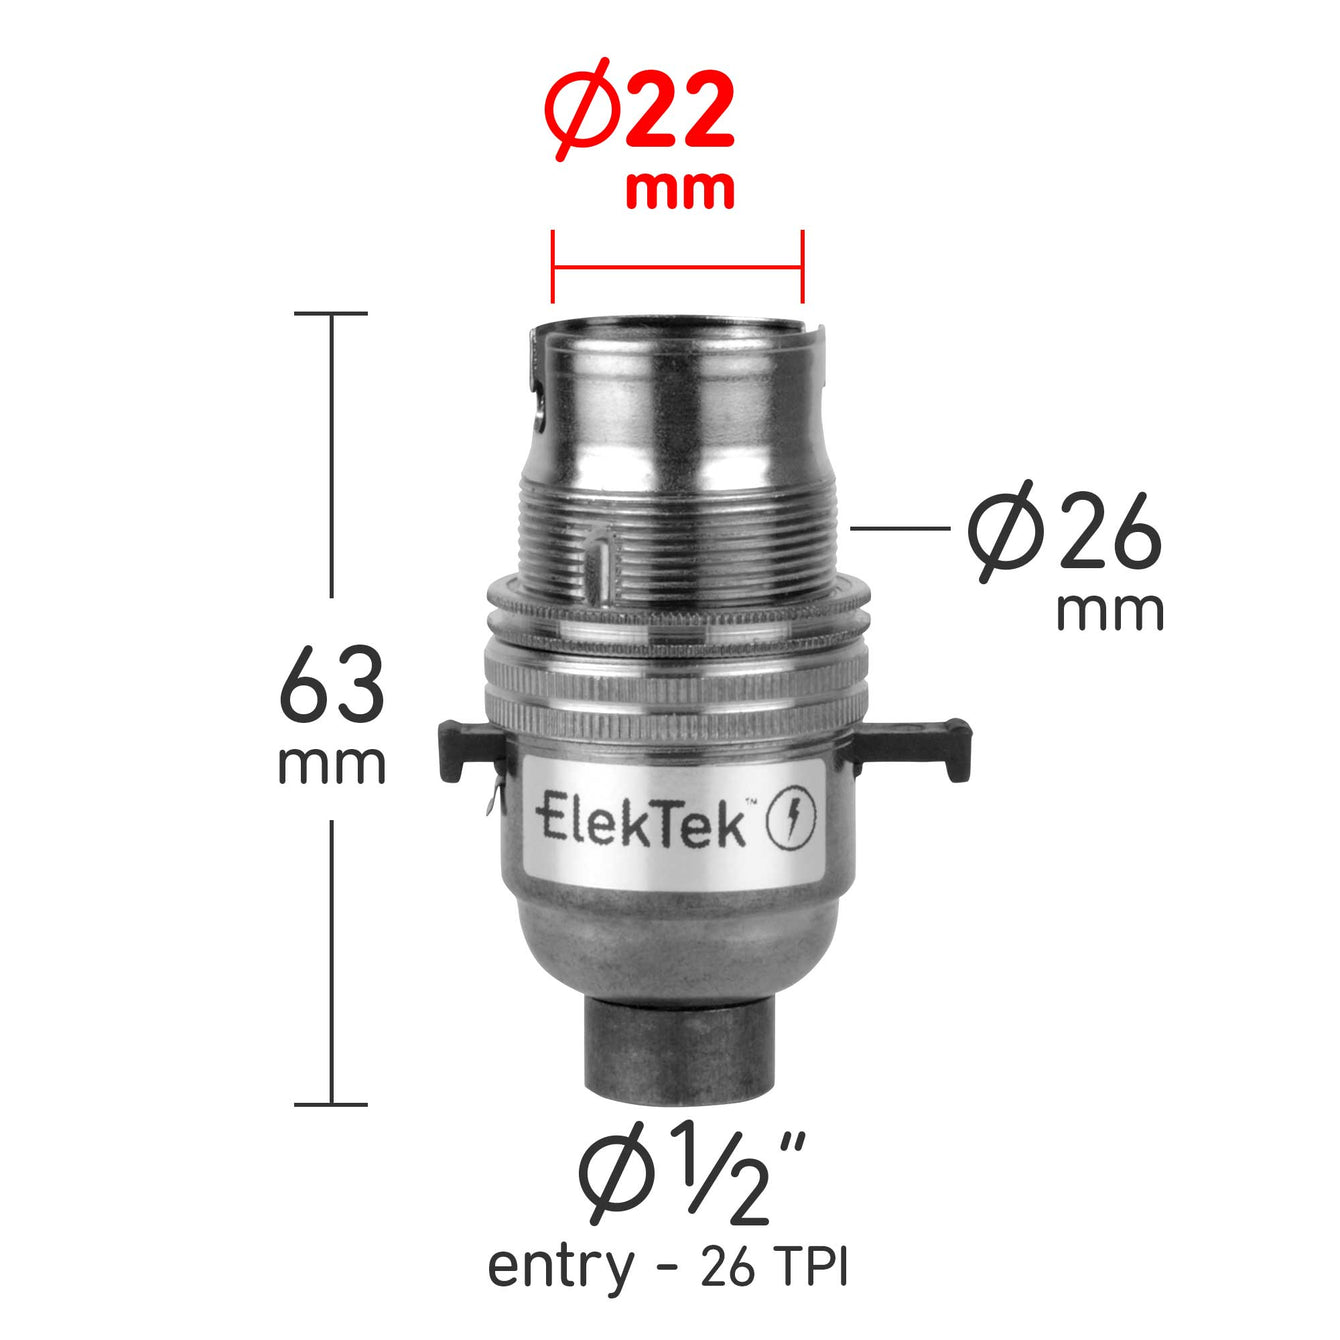 ElekTek Premium Lamp Kit Brass Safety Switch B22 Lamp Holder with Gold Flex and 3A UK Plug - Buy It Better 